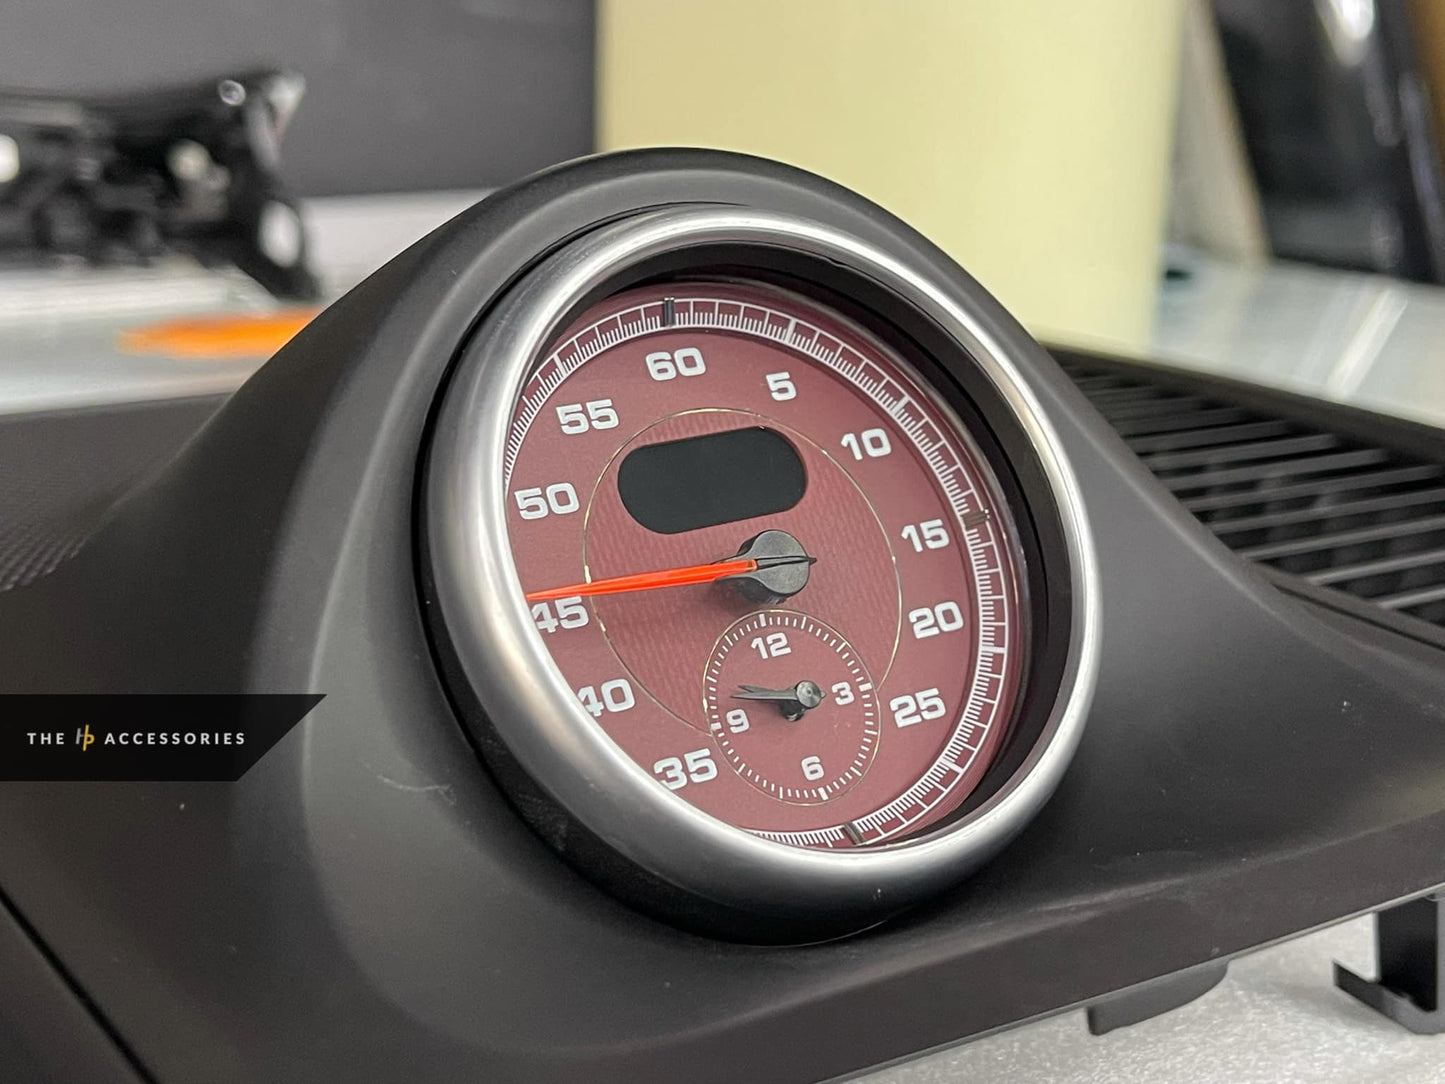 Porsche Dashboard Sport Chrono Analog Clock (OEM)